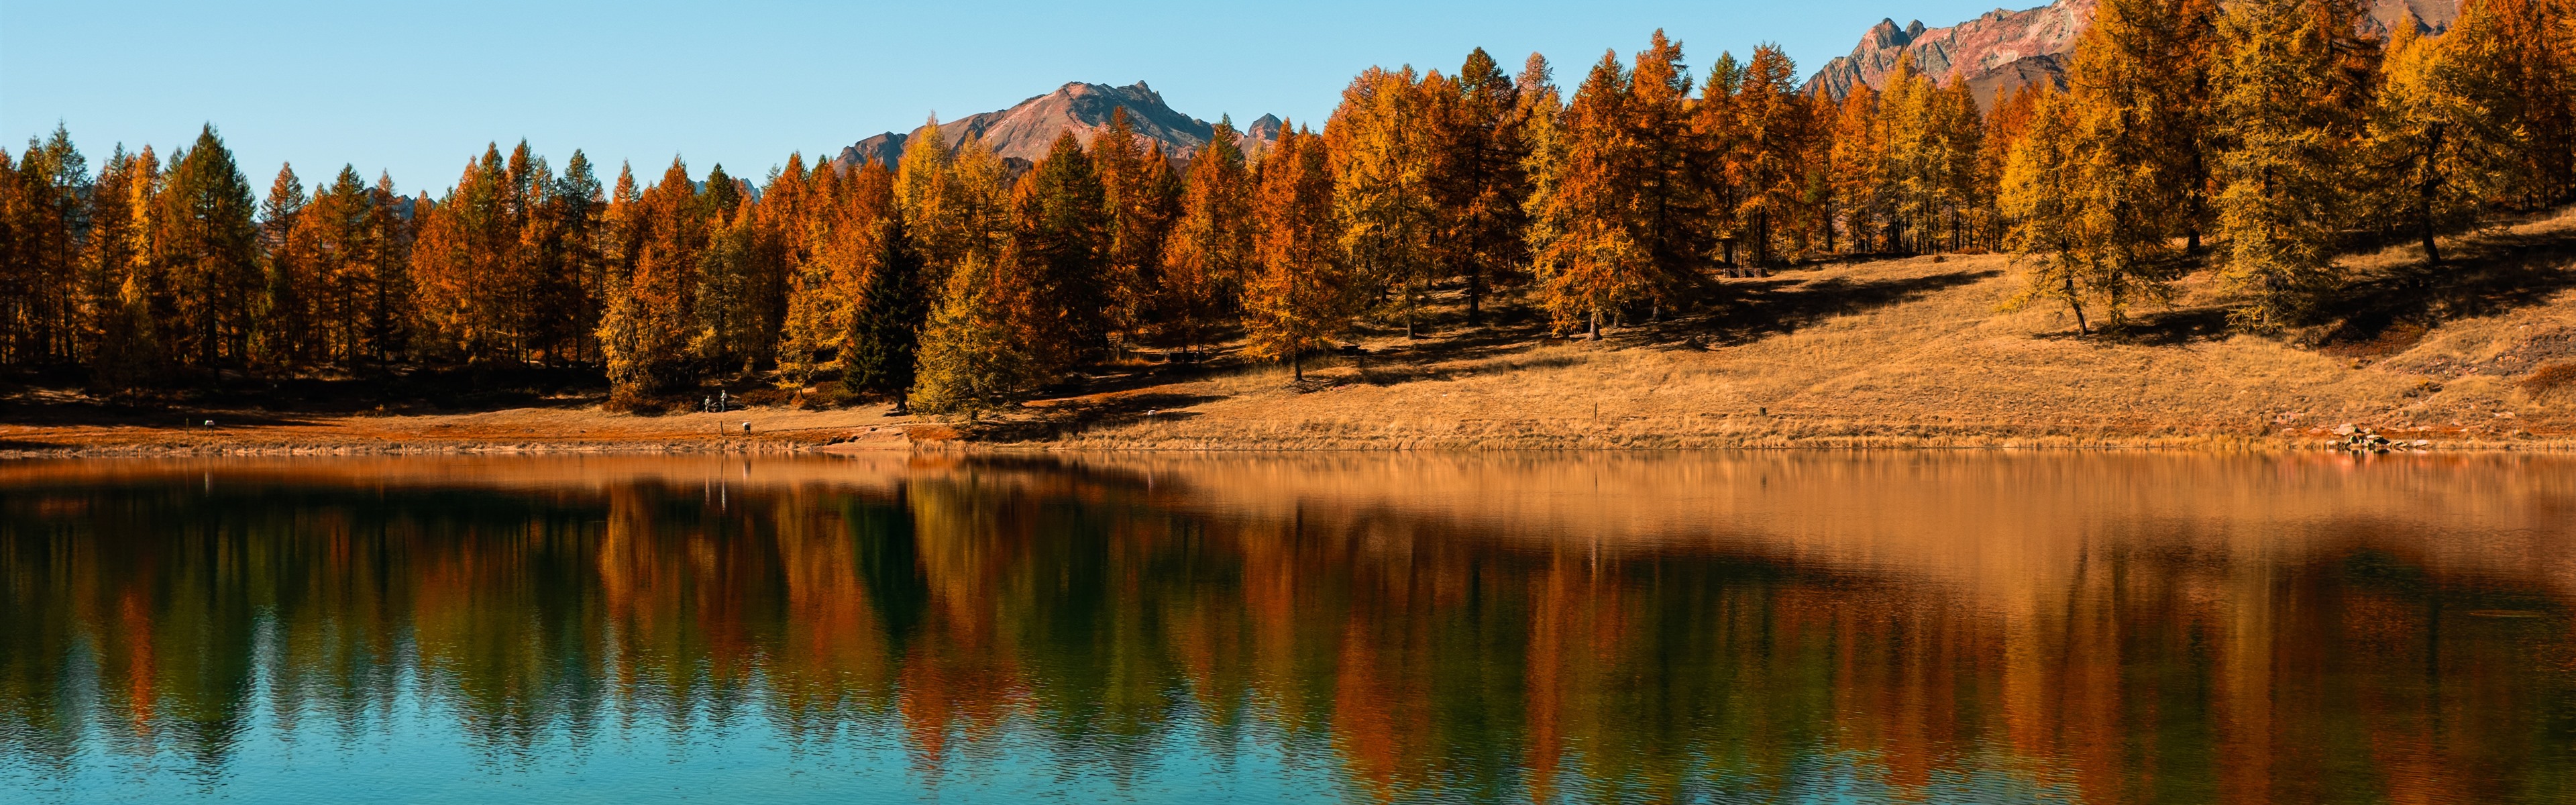 Wallpaper Lake, trees, blue sky, water reflection, autumn